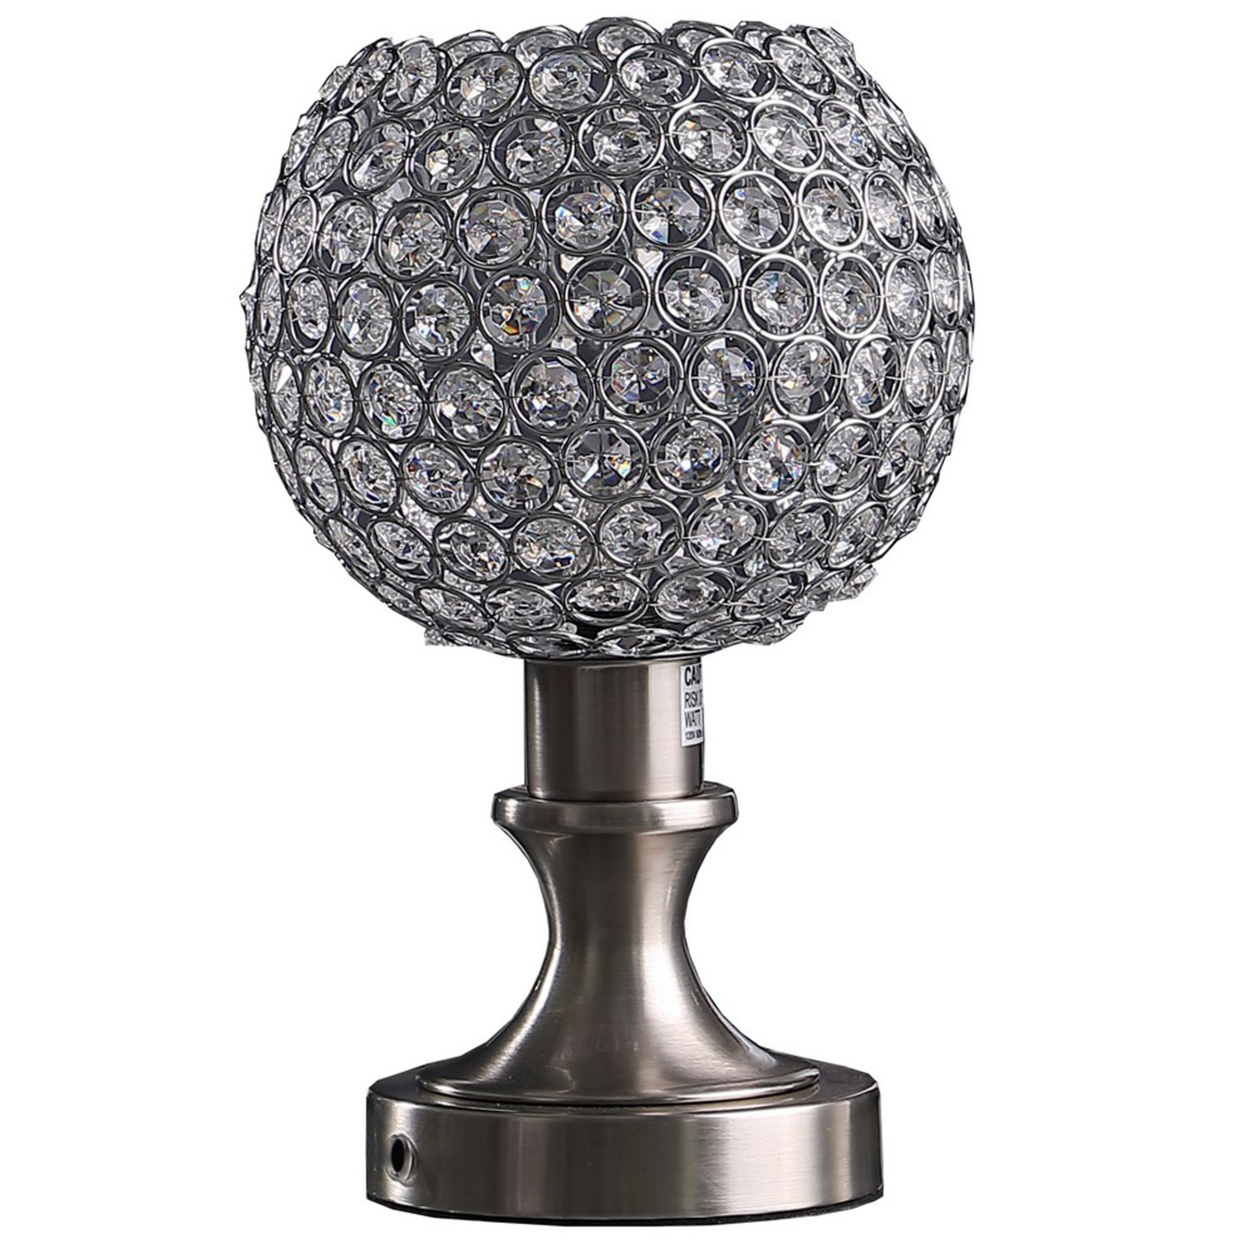 Acrylic Bead Globe Table Lamp With Metal Base, Silver- Saltoro Sherpi